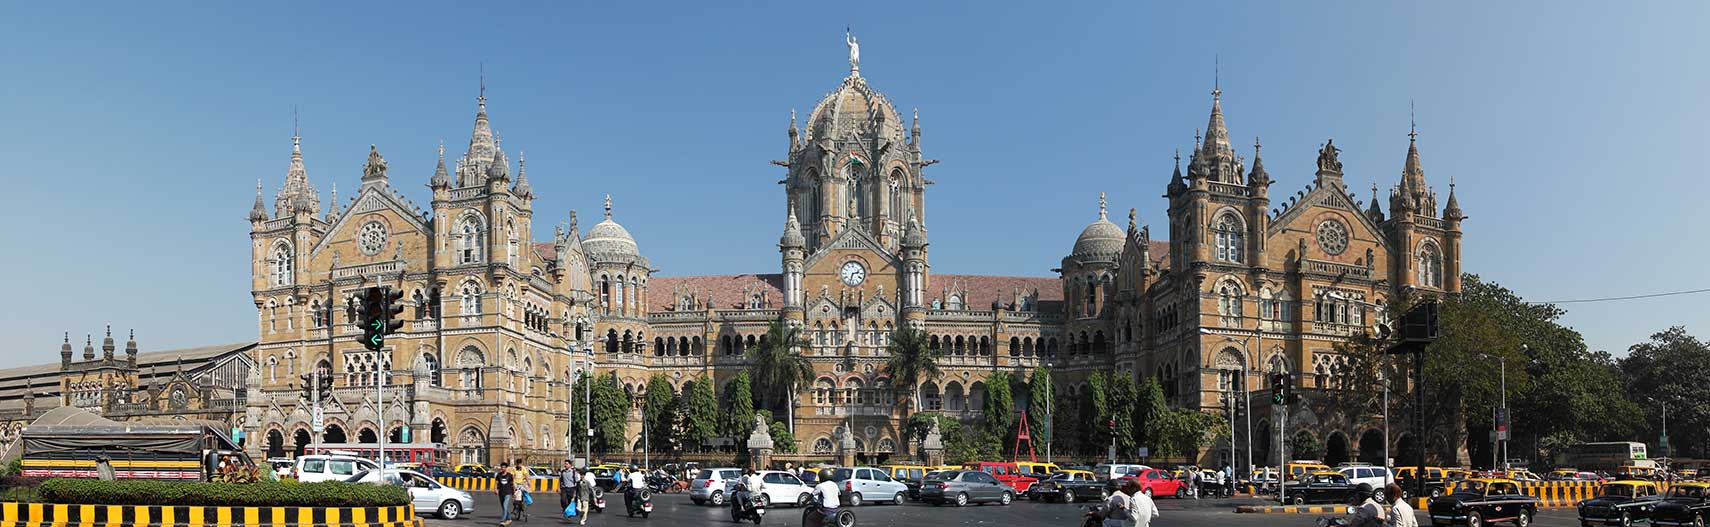 Chhatrapati Shivaji railway station, aka Victoria Terminus in Mumbai